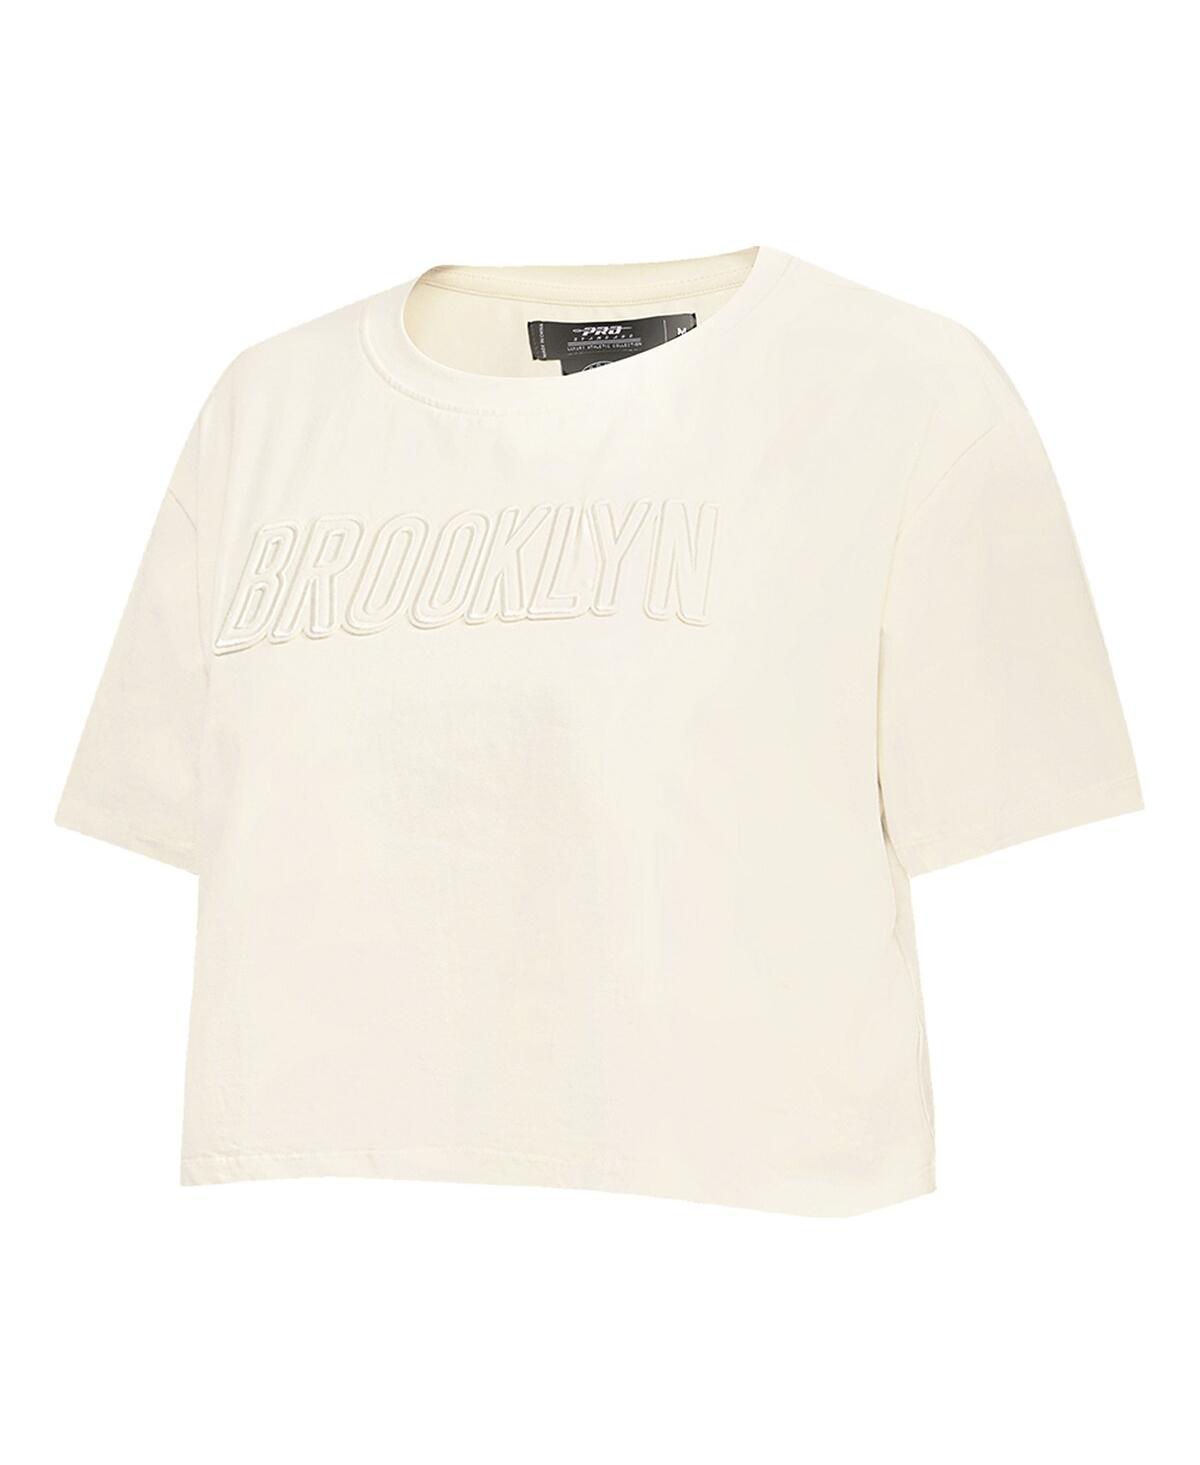 Shop Pro Standard Women's  Cream Brooklyn Nets Neutral Boxy Crop T-shirt